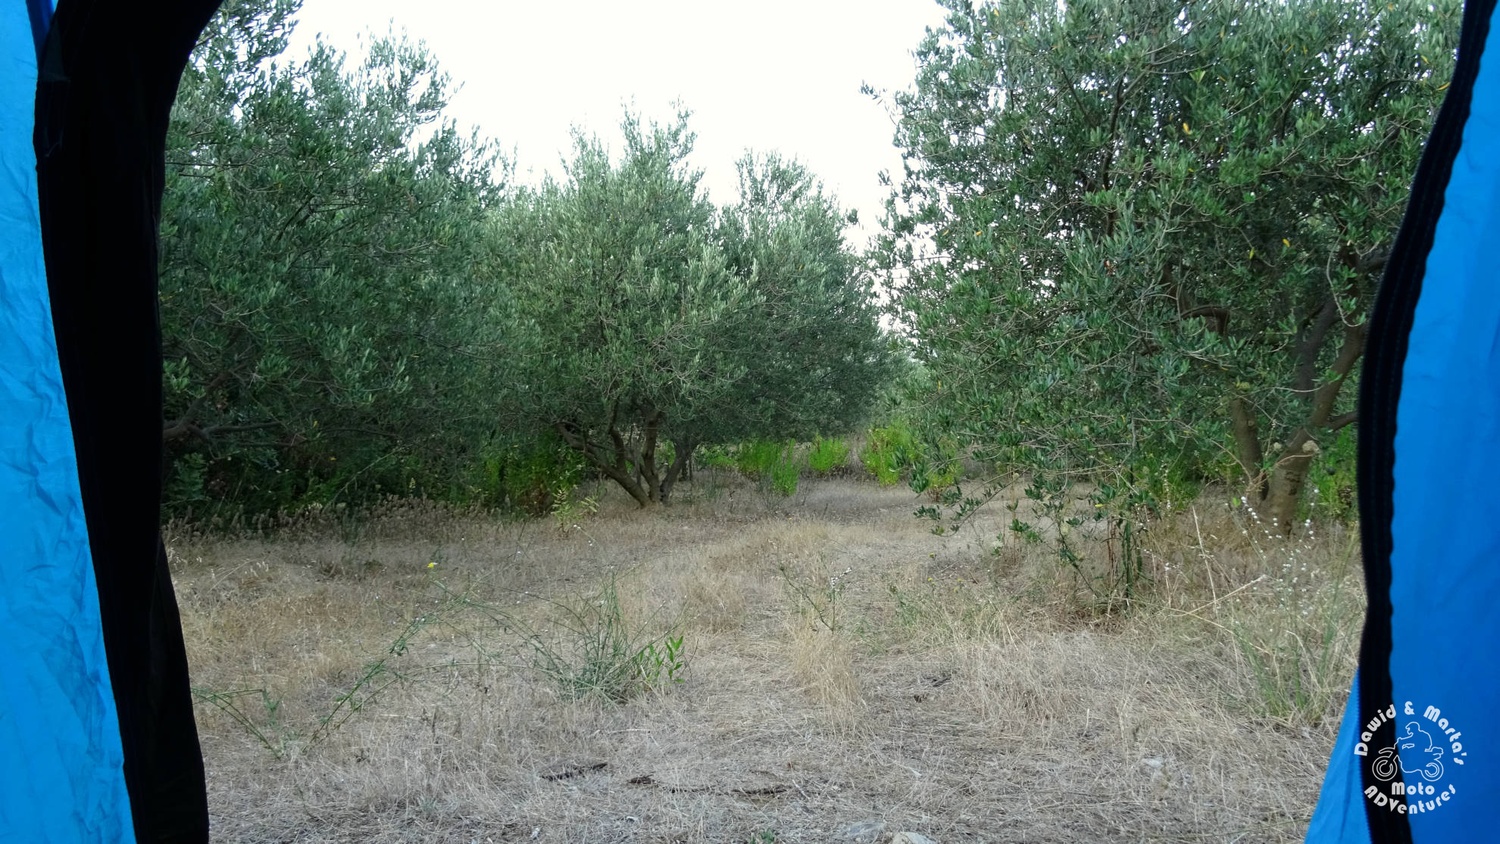 The olive grove at camping near Croatian Raba spot